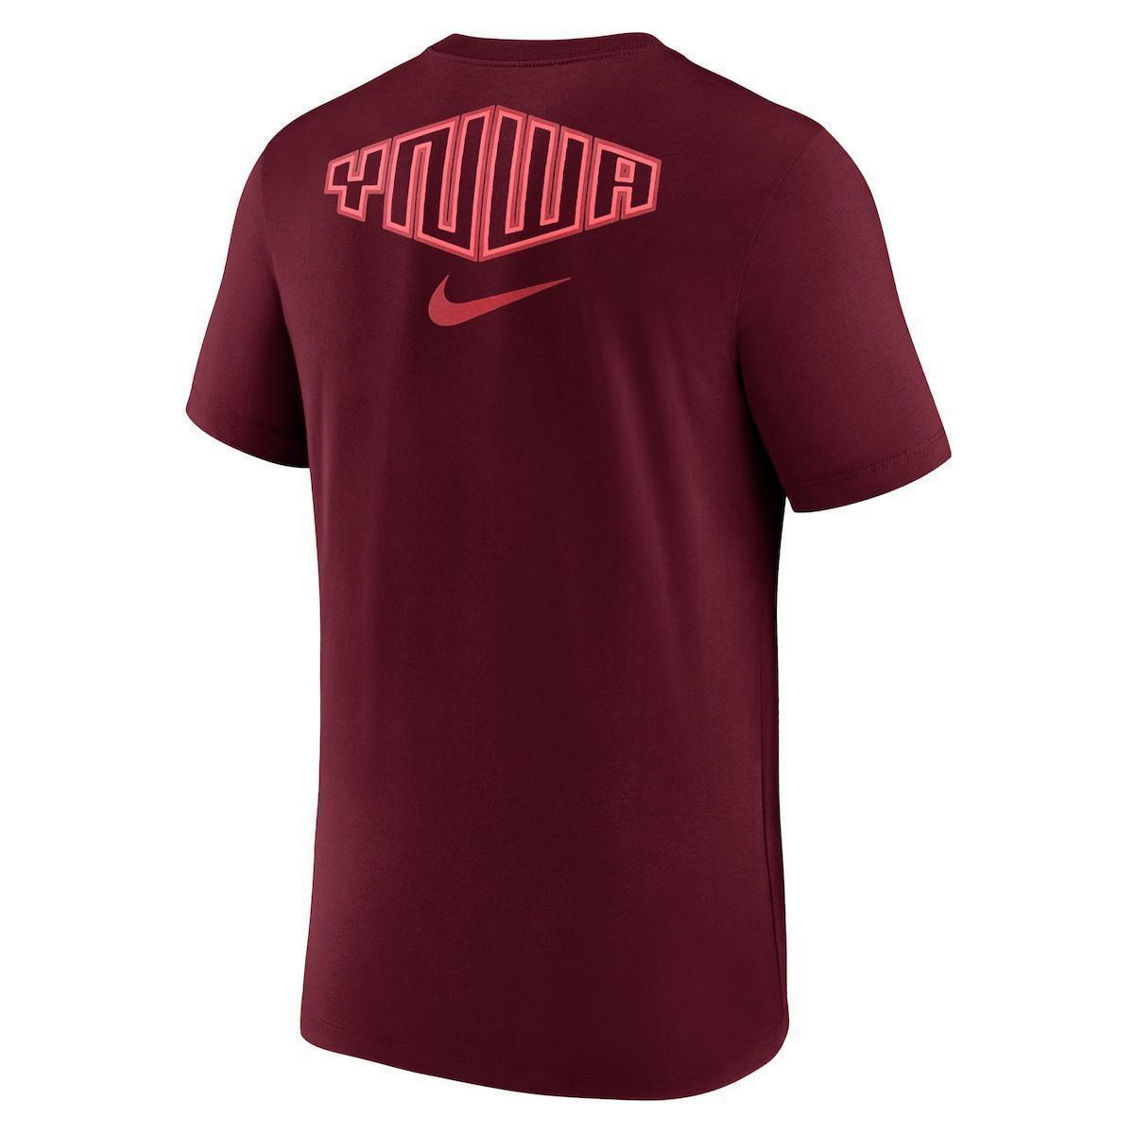 Men's Nike Burgundy Liverpool Team Voice T-Shirt - Image 4 of 4